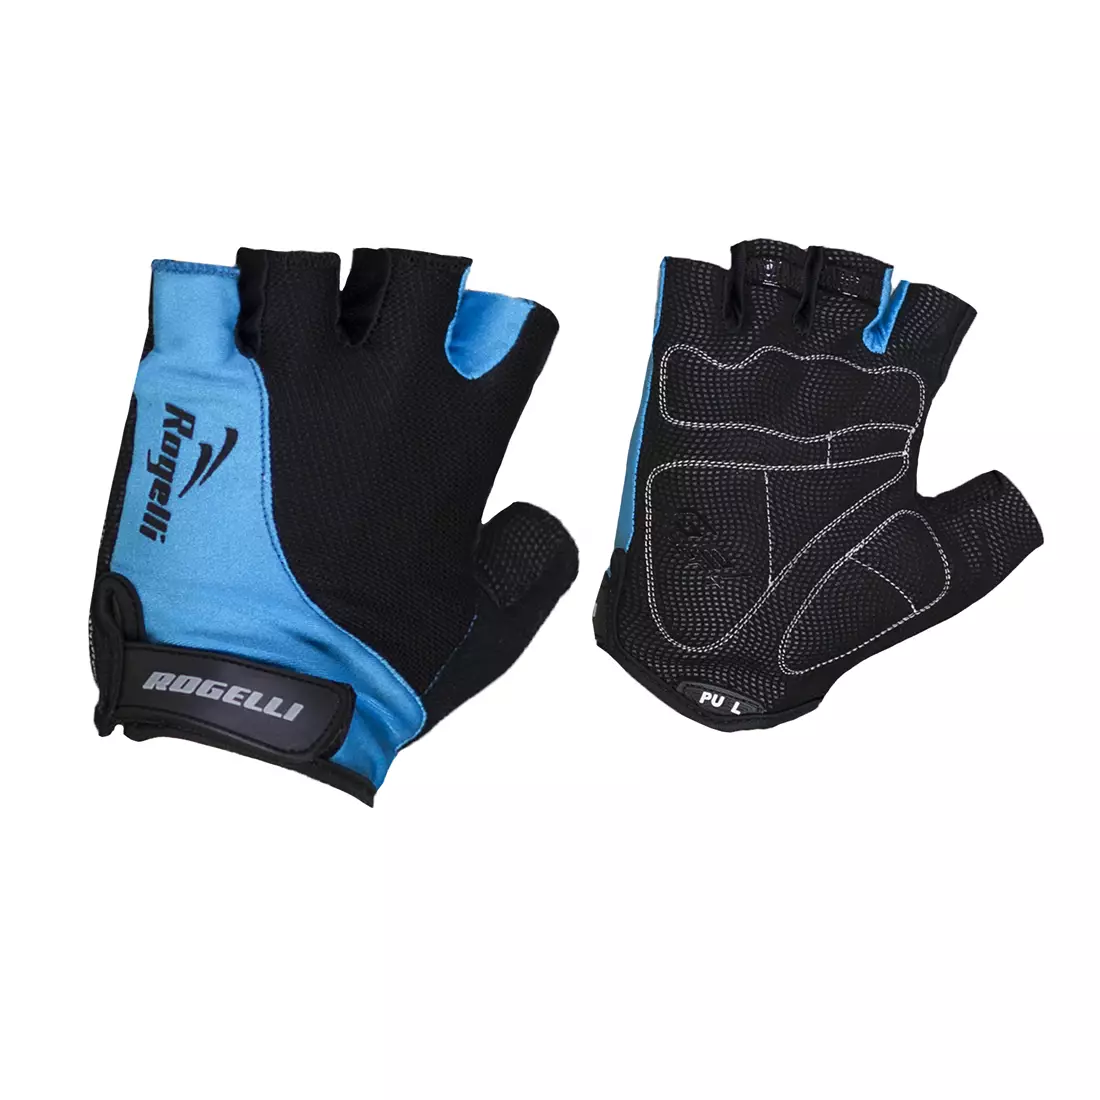 ROGELLI BIKE PRESA 006.354 men's bicycle gloves Black/Blue